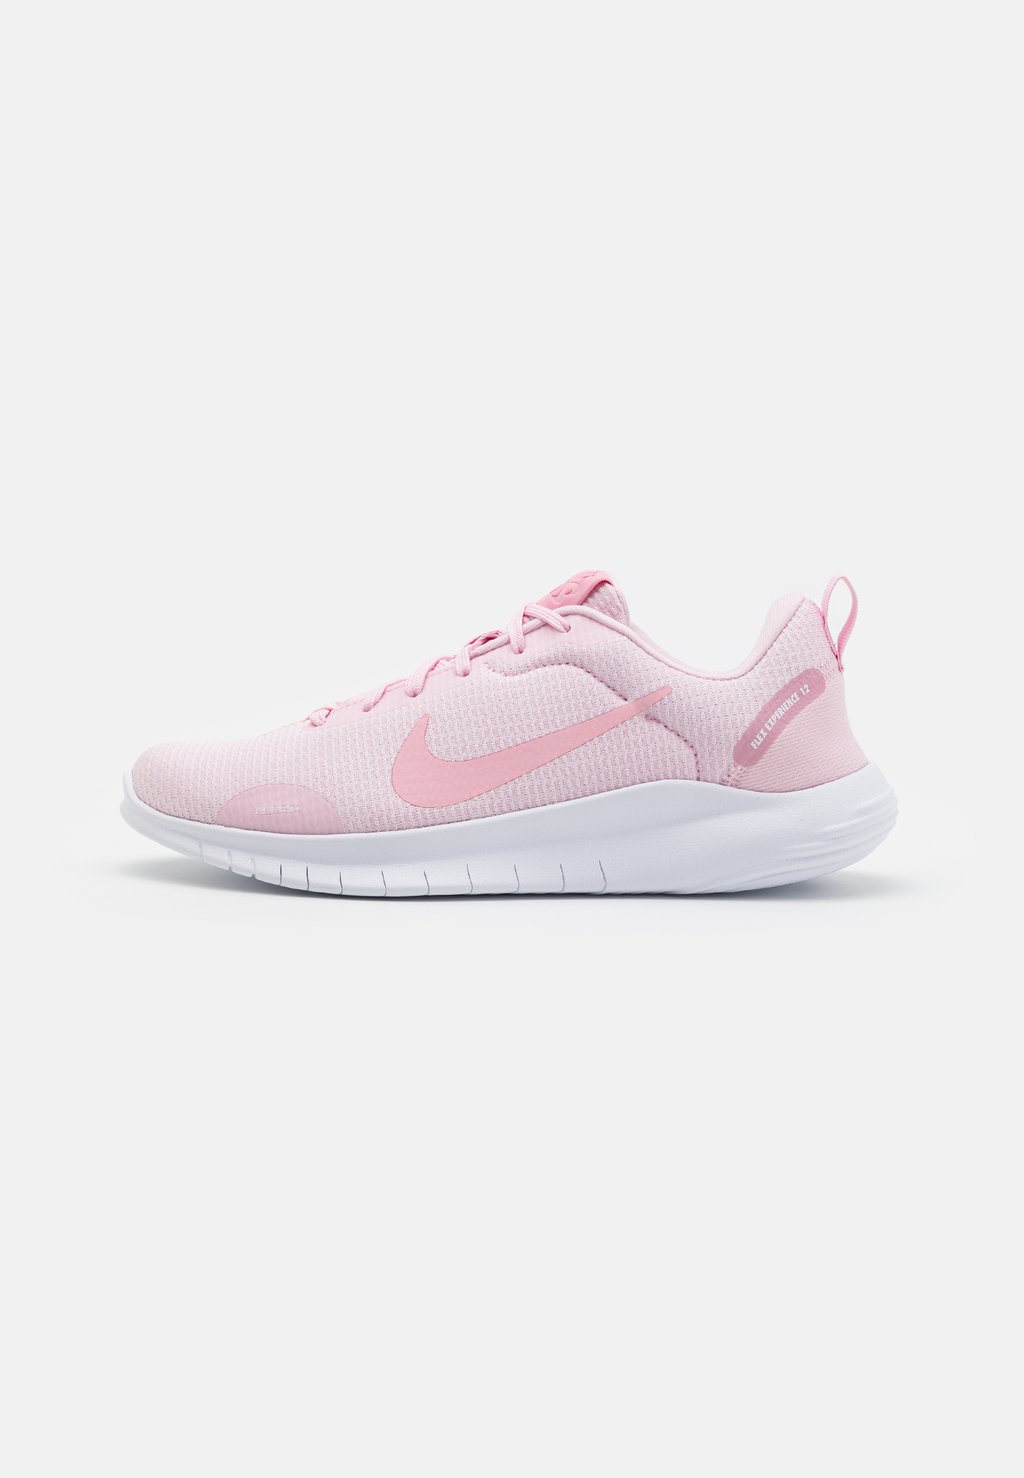 Нейтральные кроссовки FLEX EXPERIENCE RN 12 Nike, цвет pink foam/white/pearl pink/med soft pink кроссовки superdry zapatillas soft pink